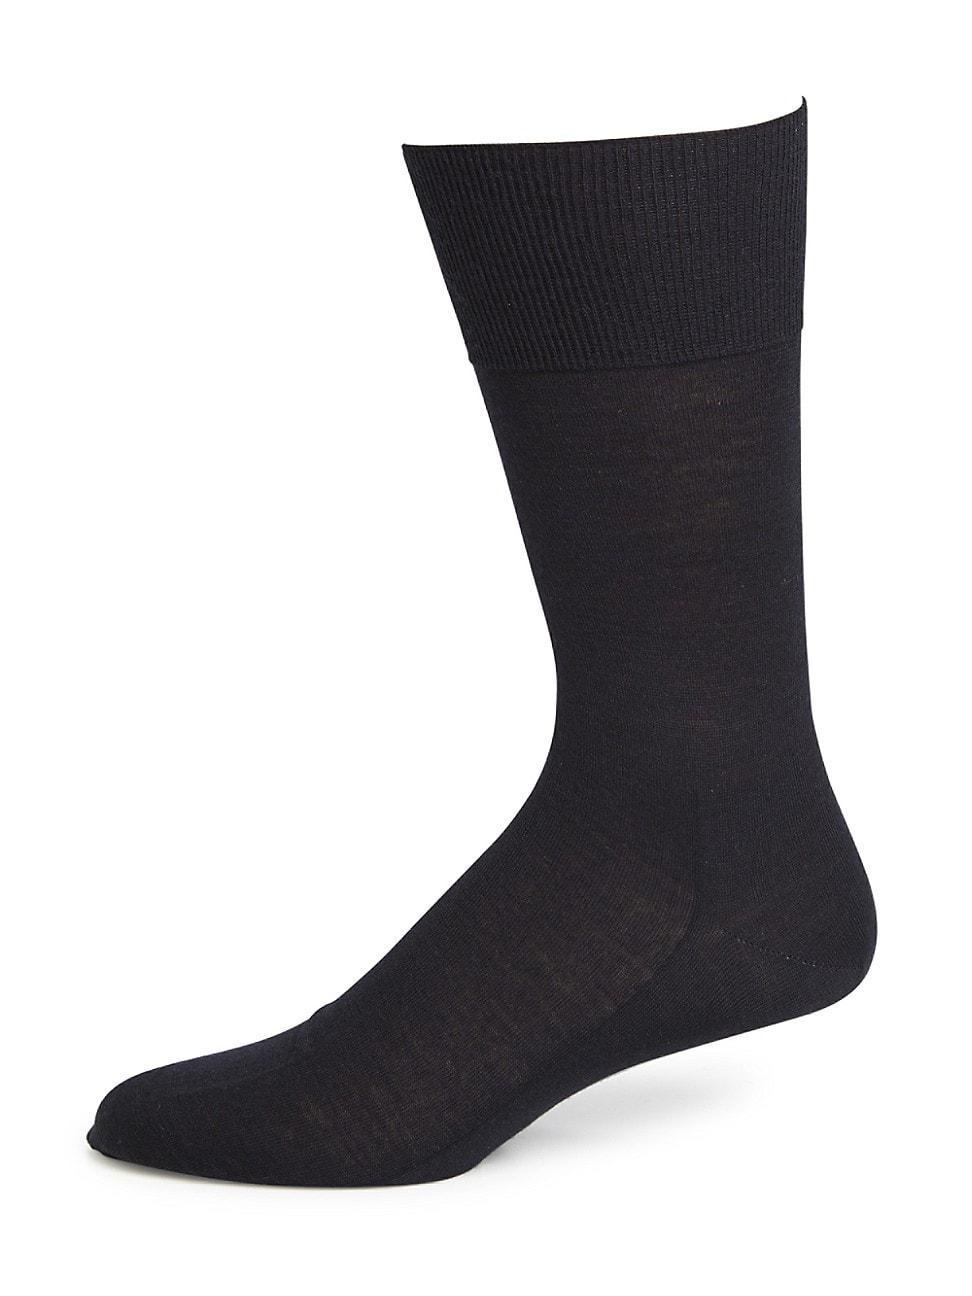 Falke No. 2 Cashmere Blend Dress Socks Product Image